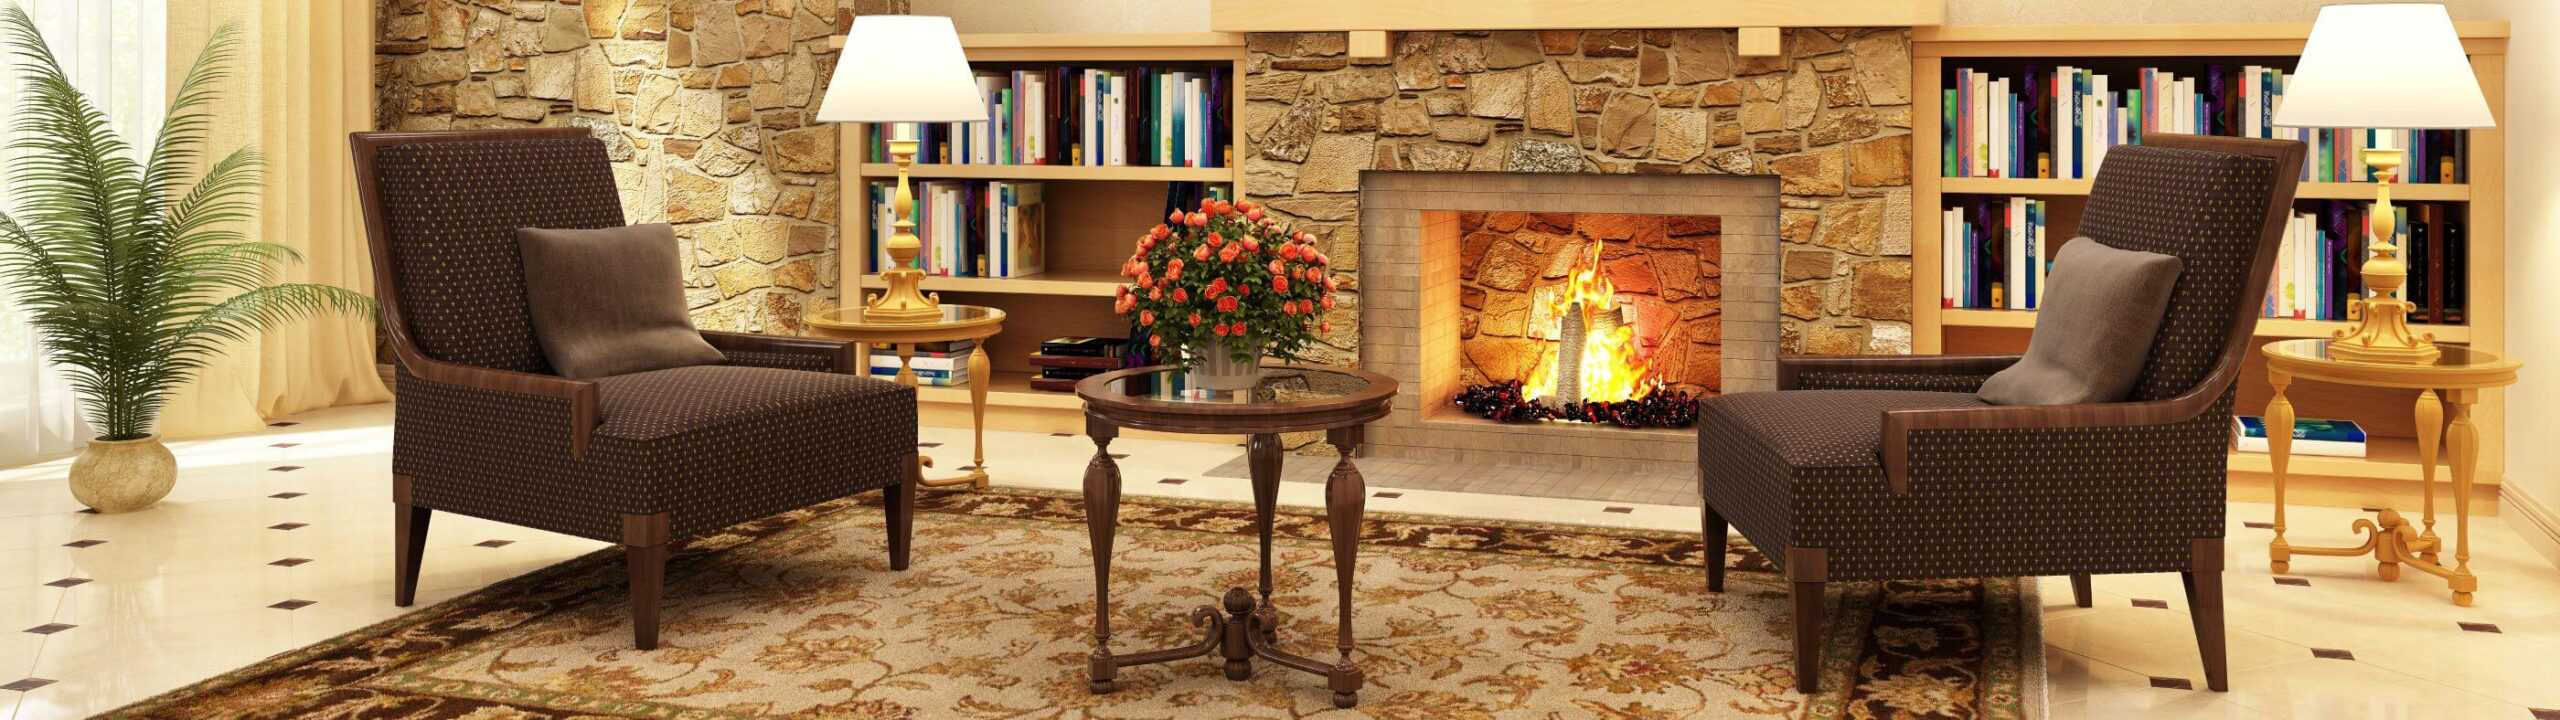 Expert Fireplace Service installing Fireplace Mantel - Masters Services Chimney & Masonry